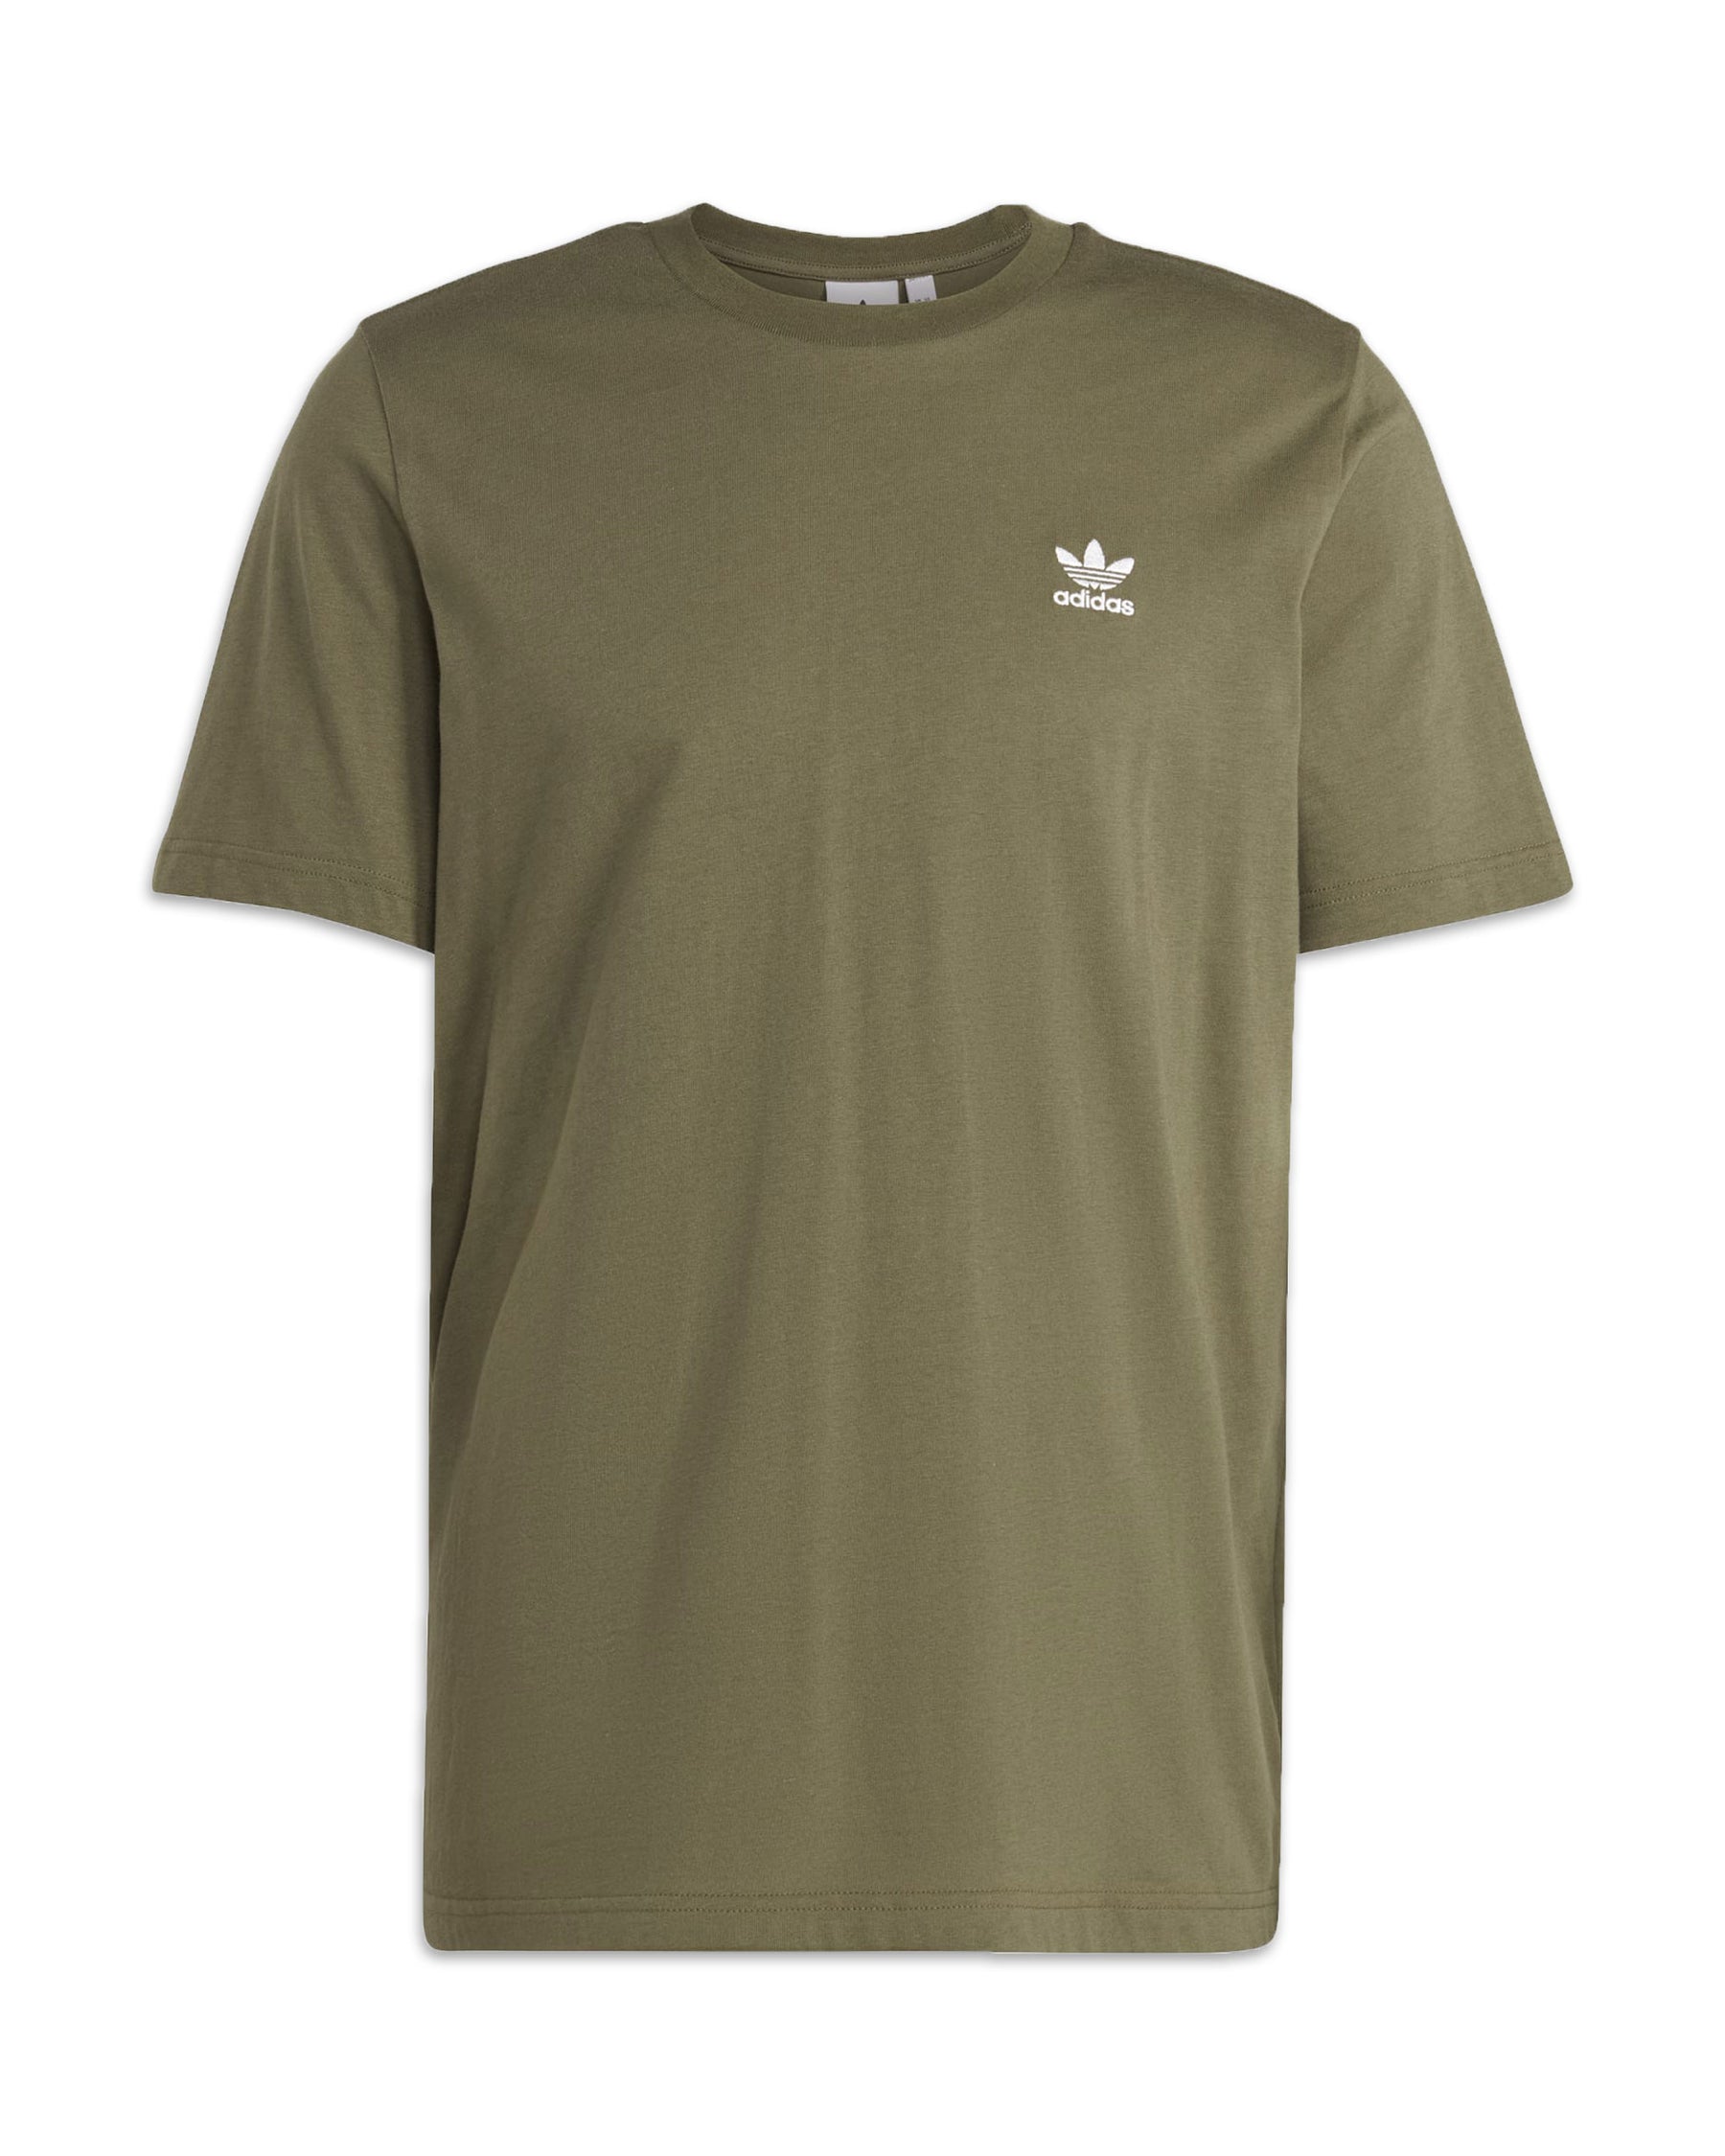 Adidas Originals Essential Tee Military Green